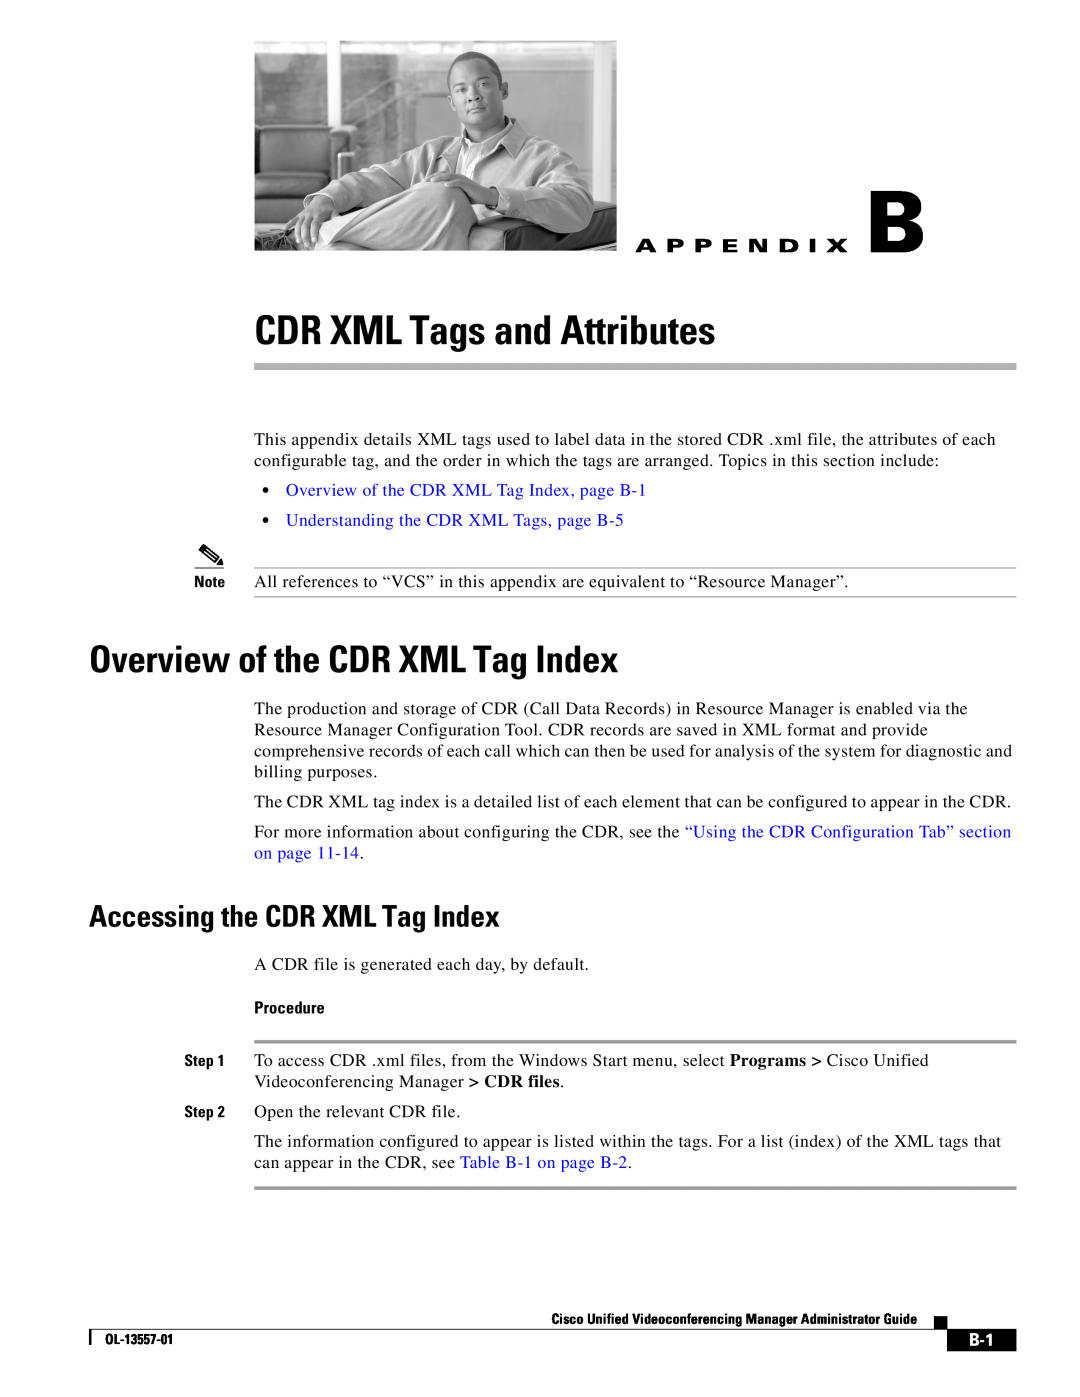 Cisco Systems appendix Overview of the CDR XML Tag Index, Accessing the CDR XML Tag Index, Procedure, A P P E N D I X B 